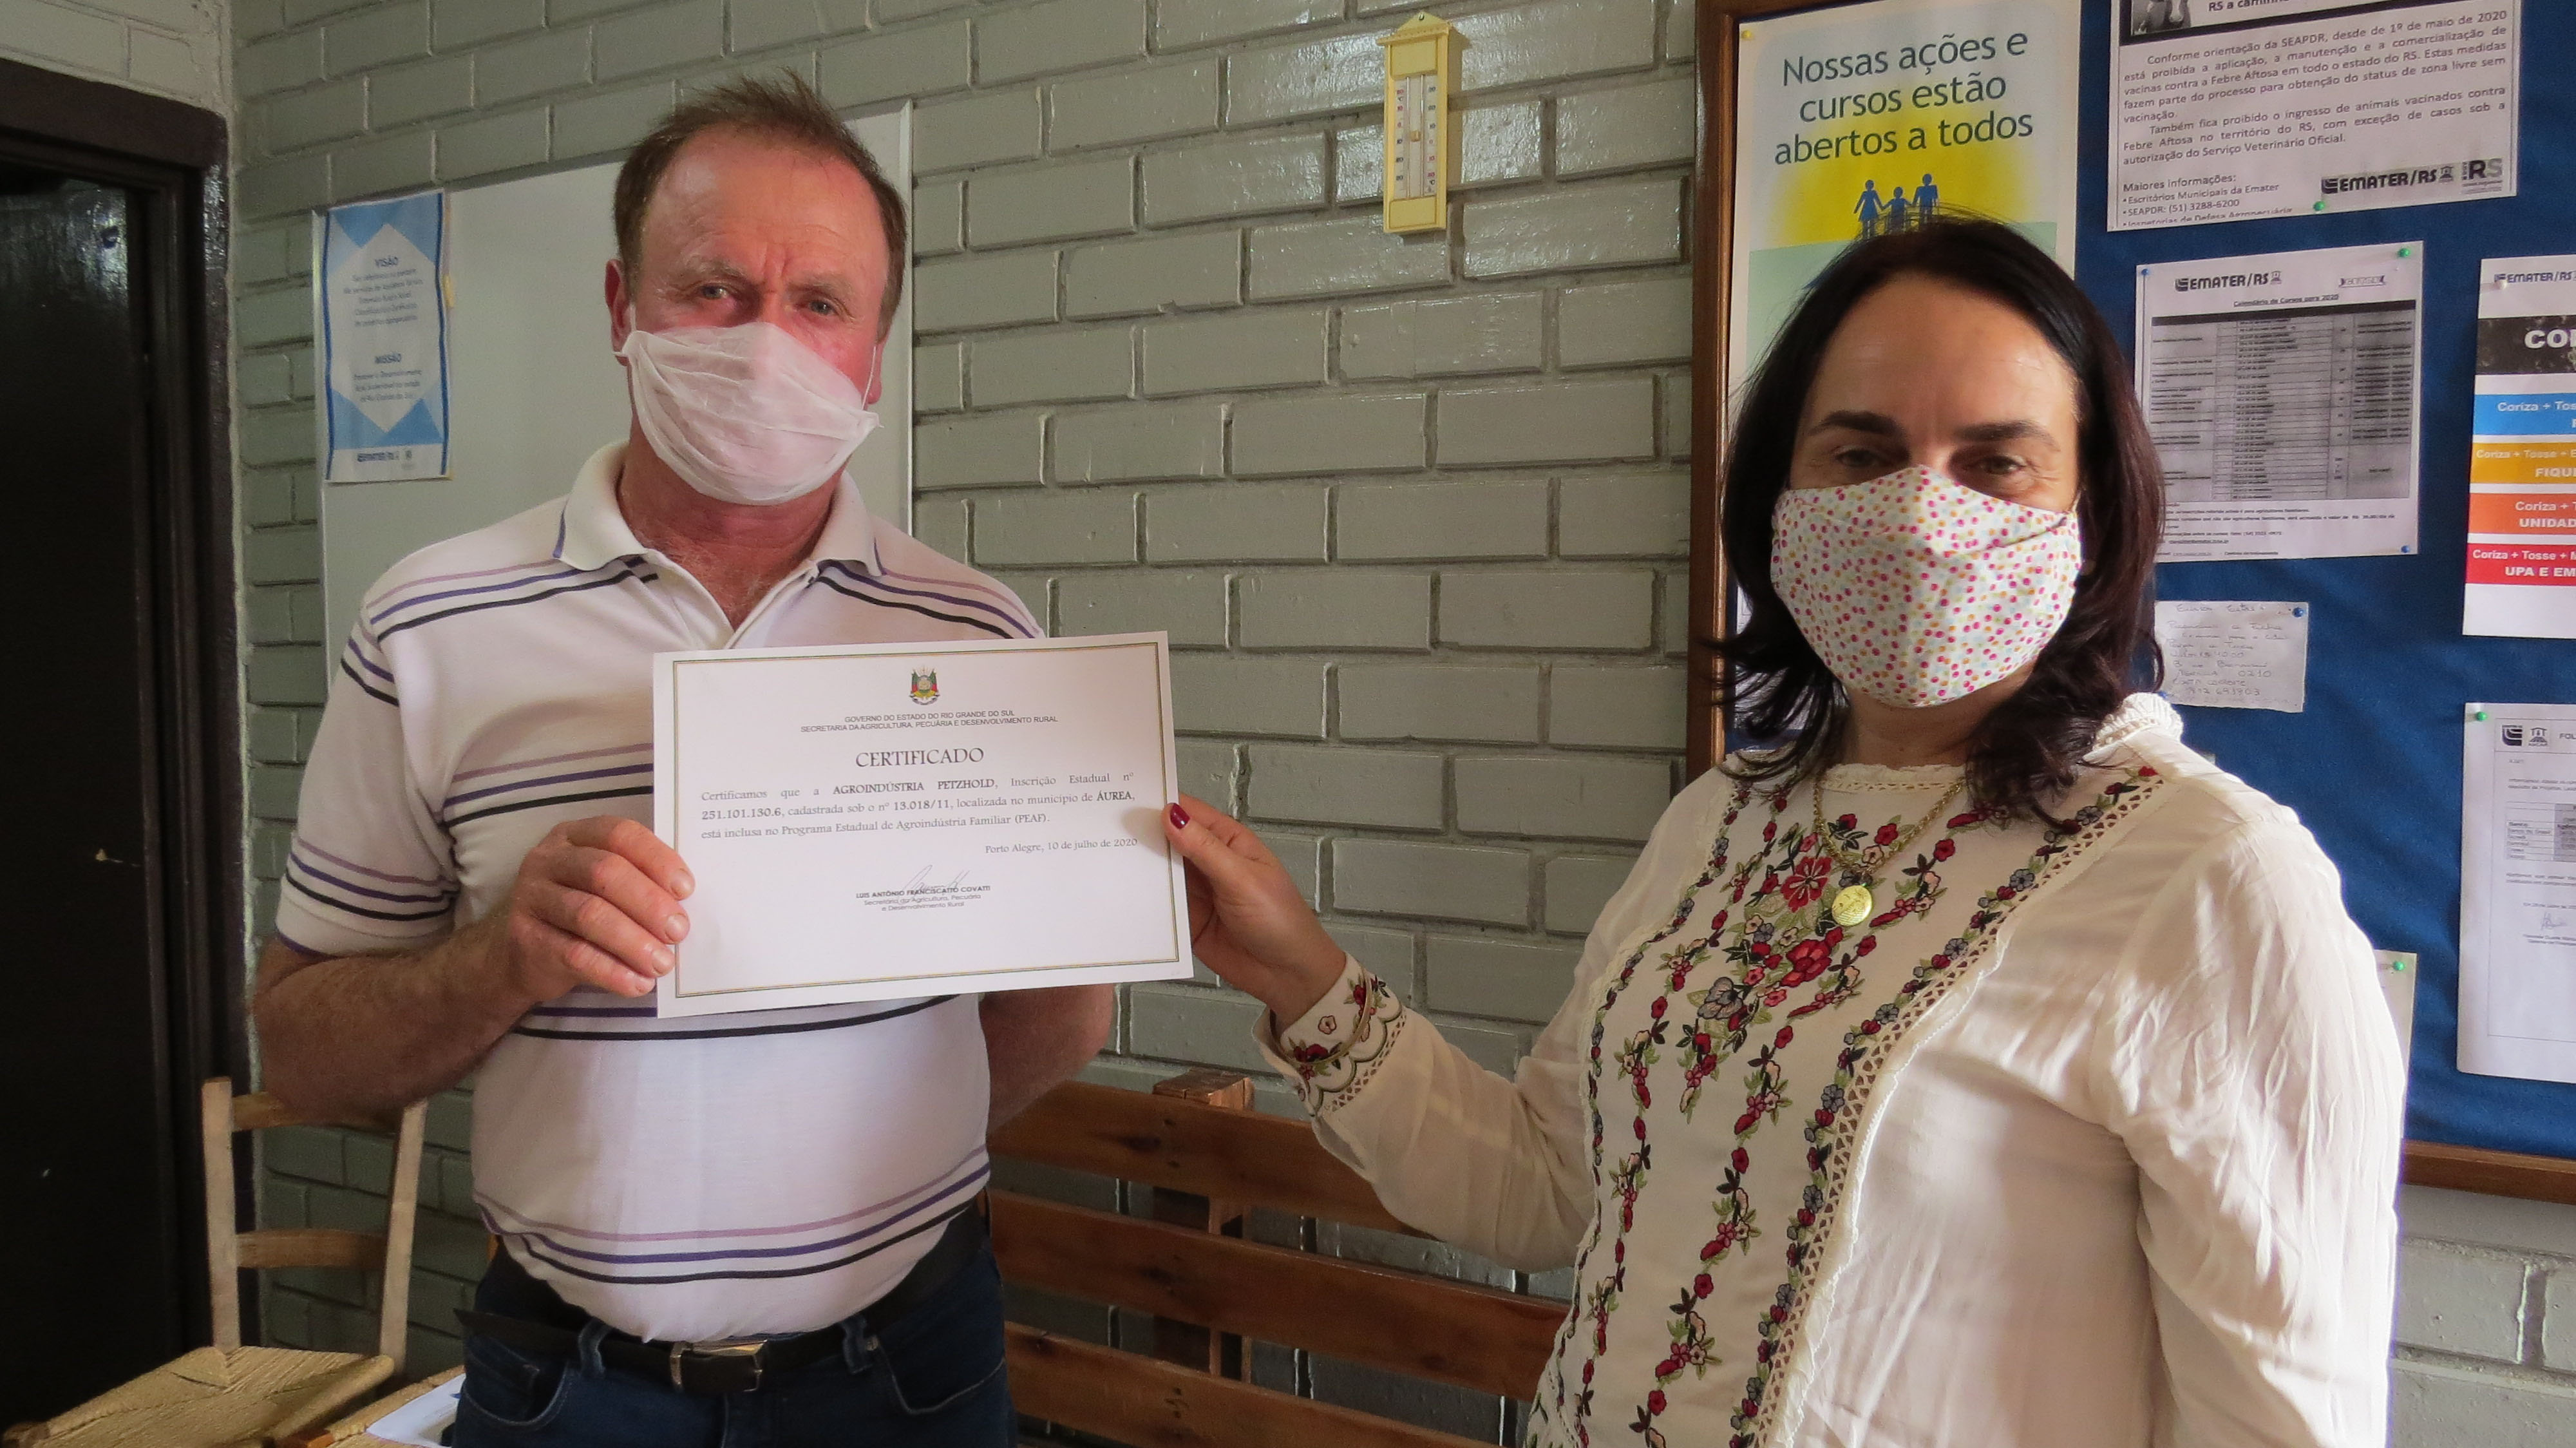 Agroindústria Petzhold recebe o certificado de Magali Salame | Fotos: Terezinha-Vilk/Emater-RS/Ascar